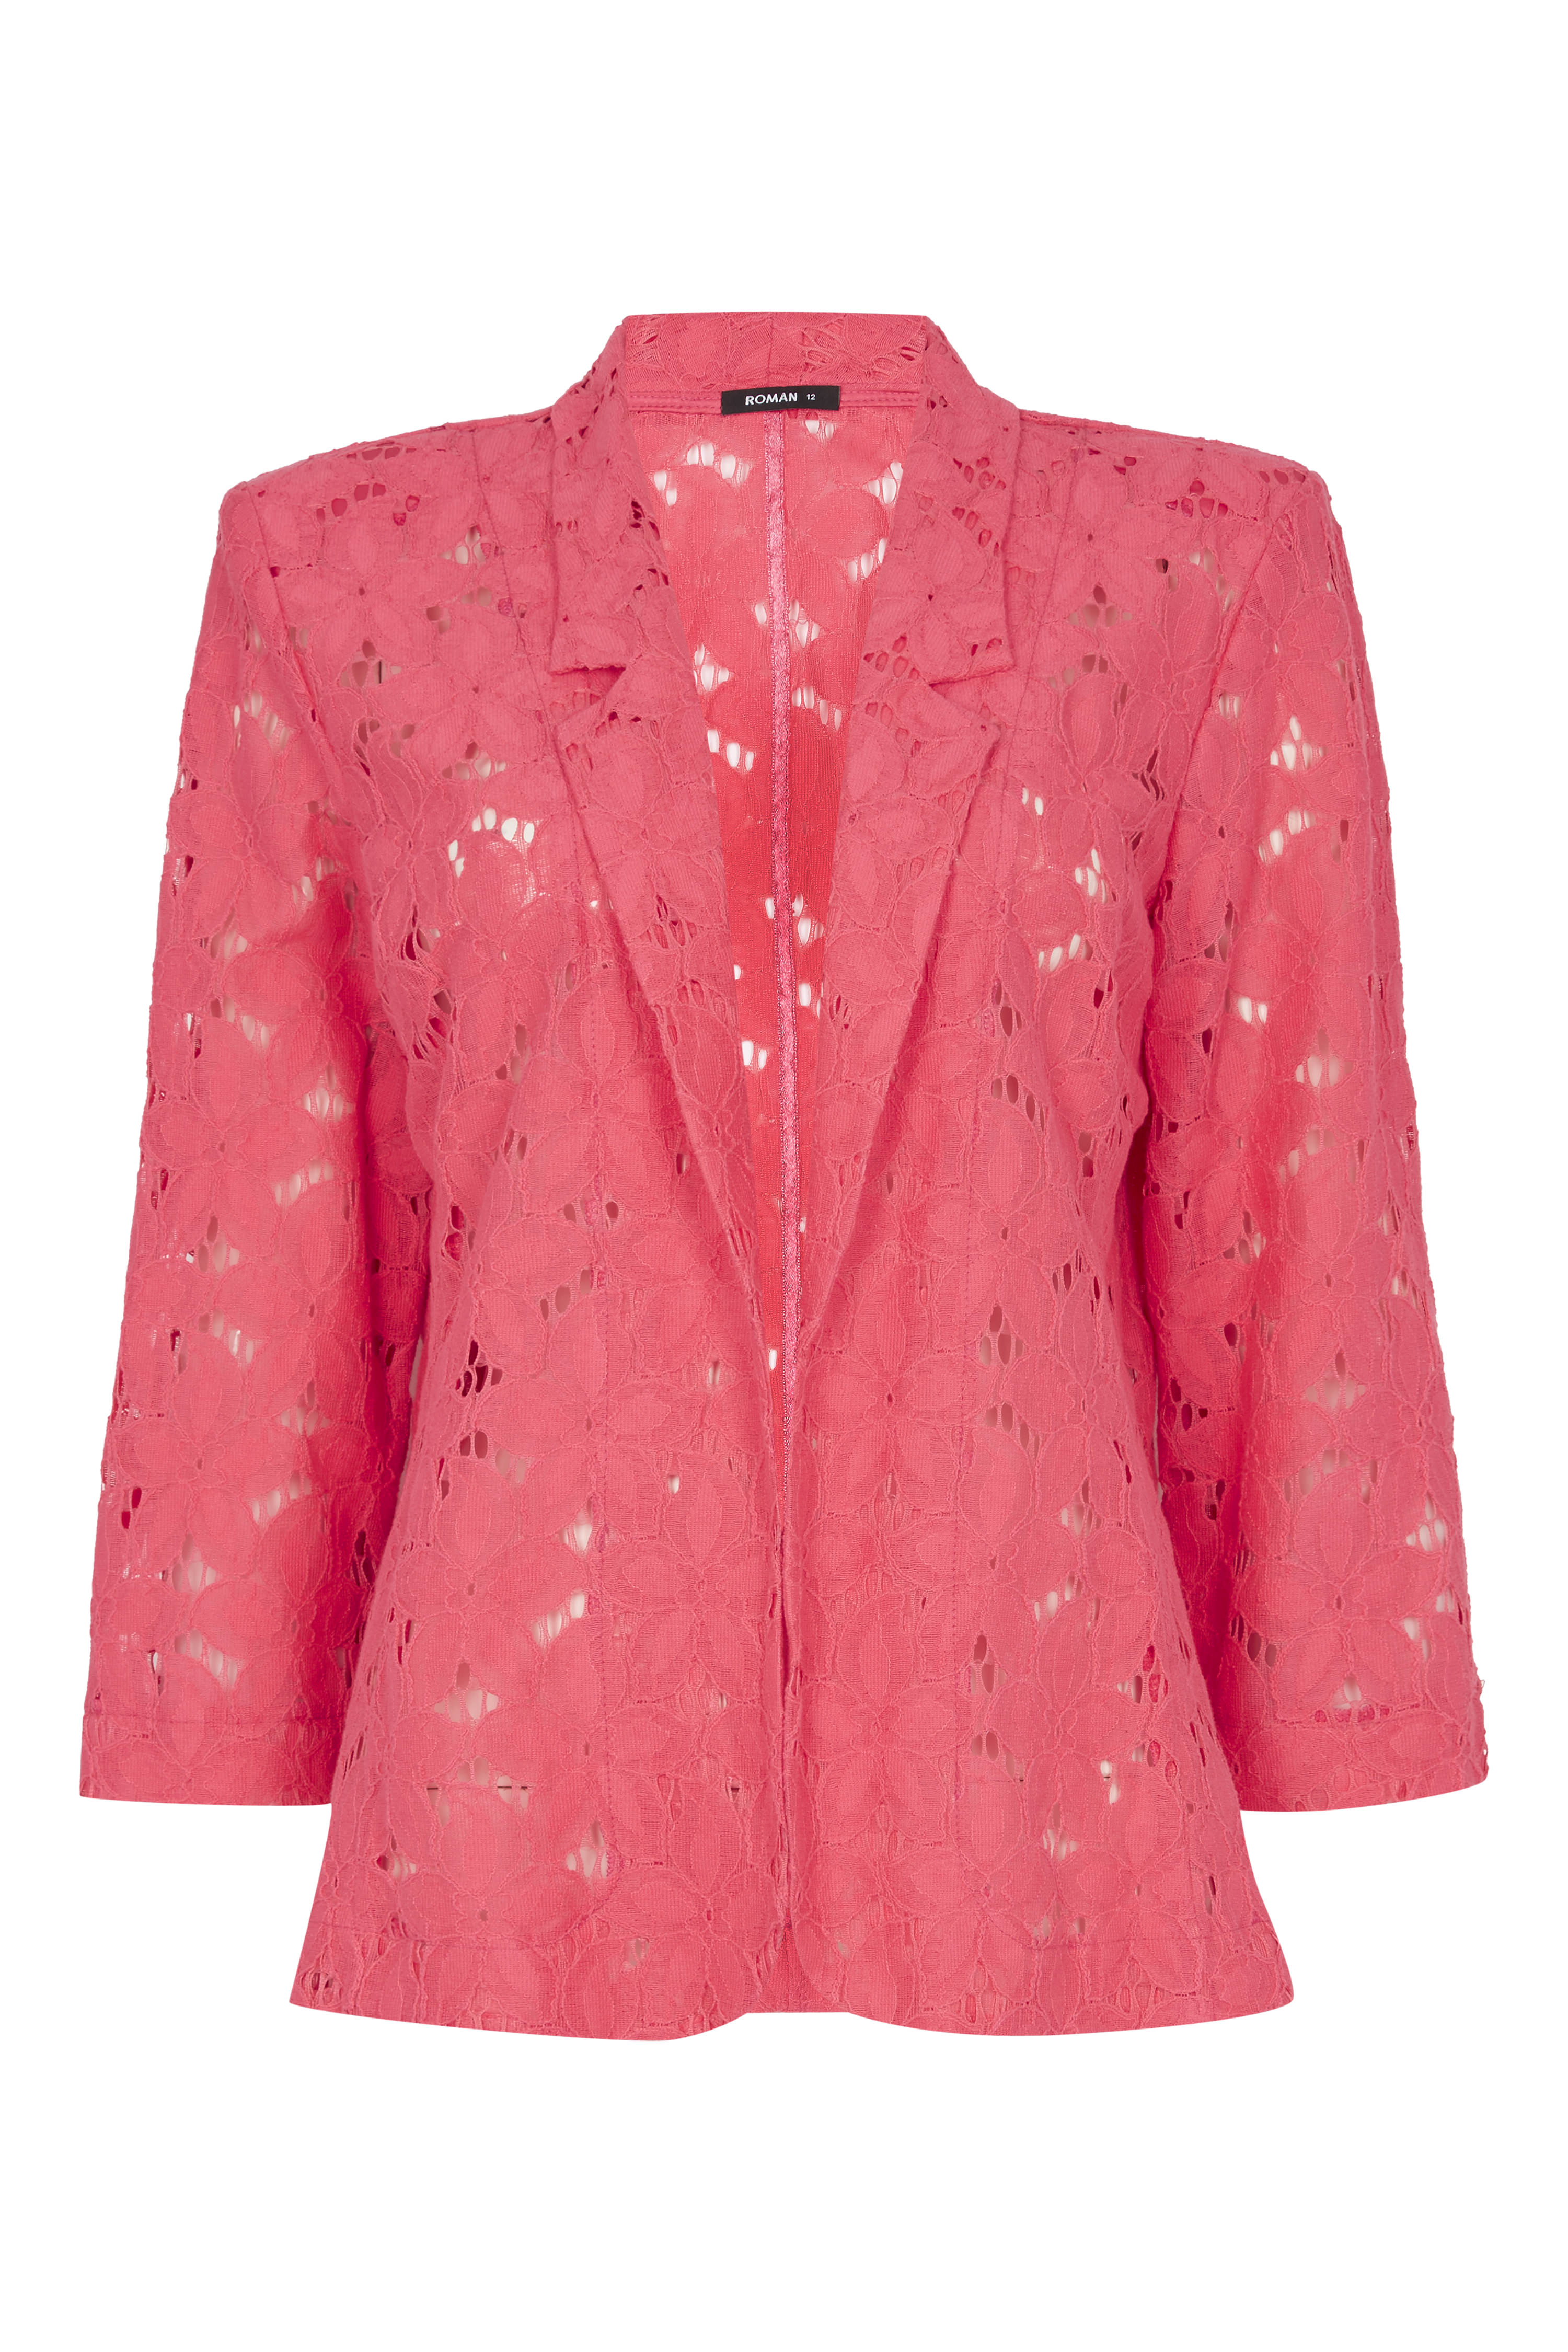 PINK Lace Jacket, Image 6 of 6